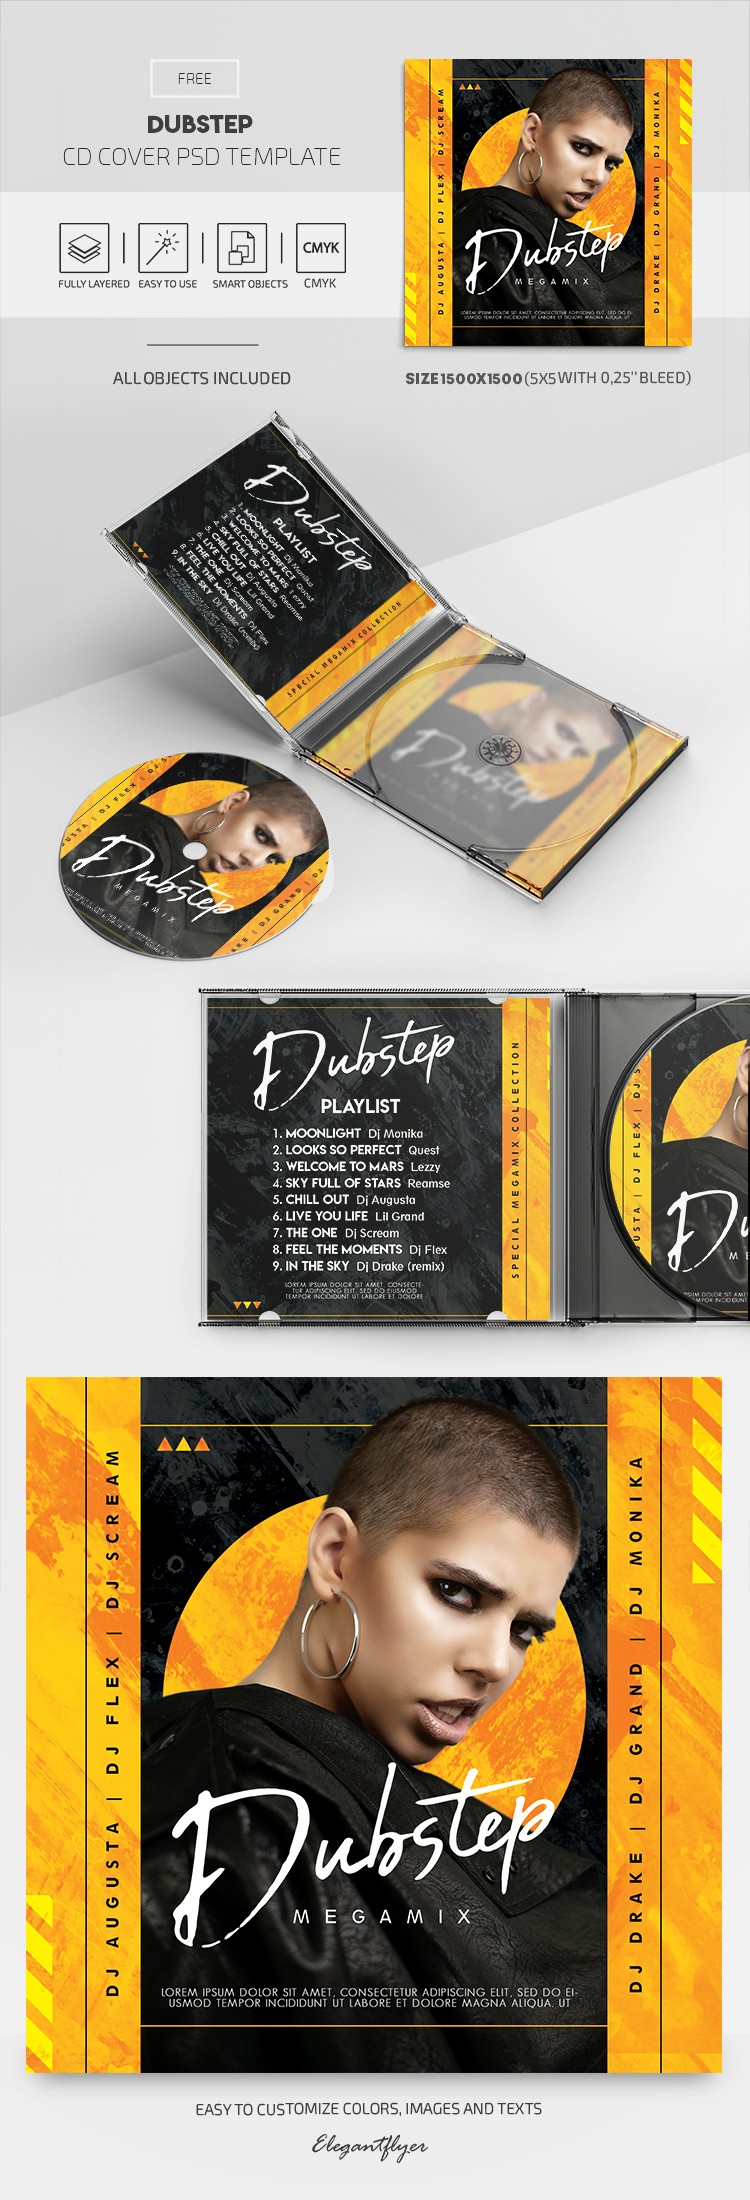 Dubstep CD Cover by ElegantFlyer